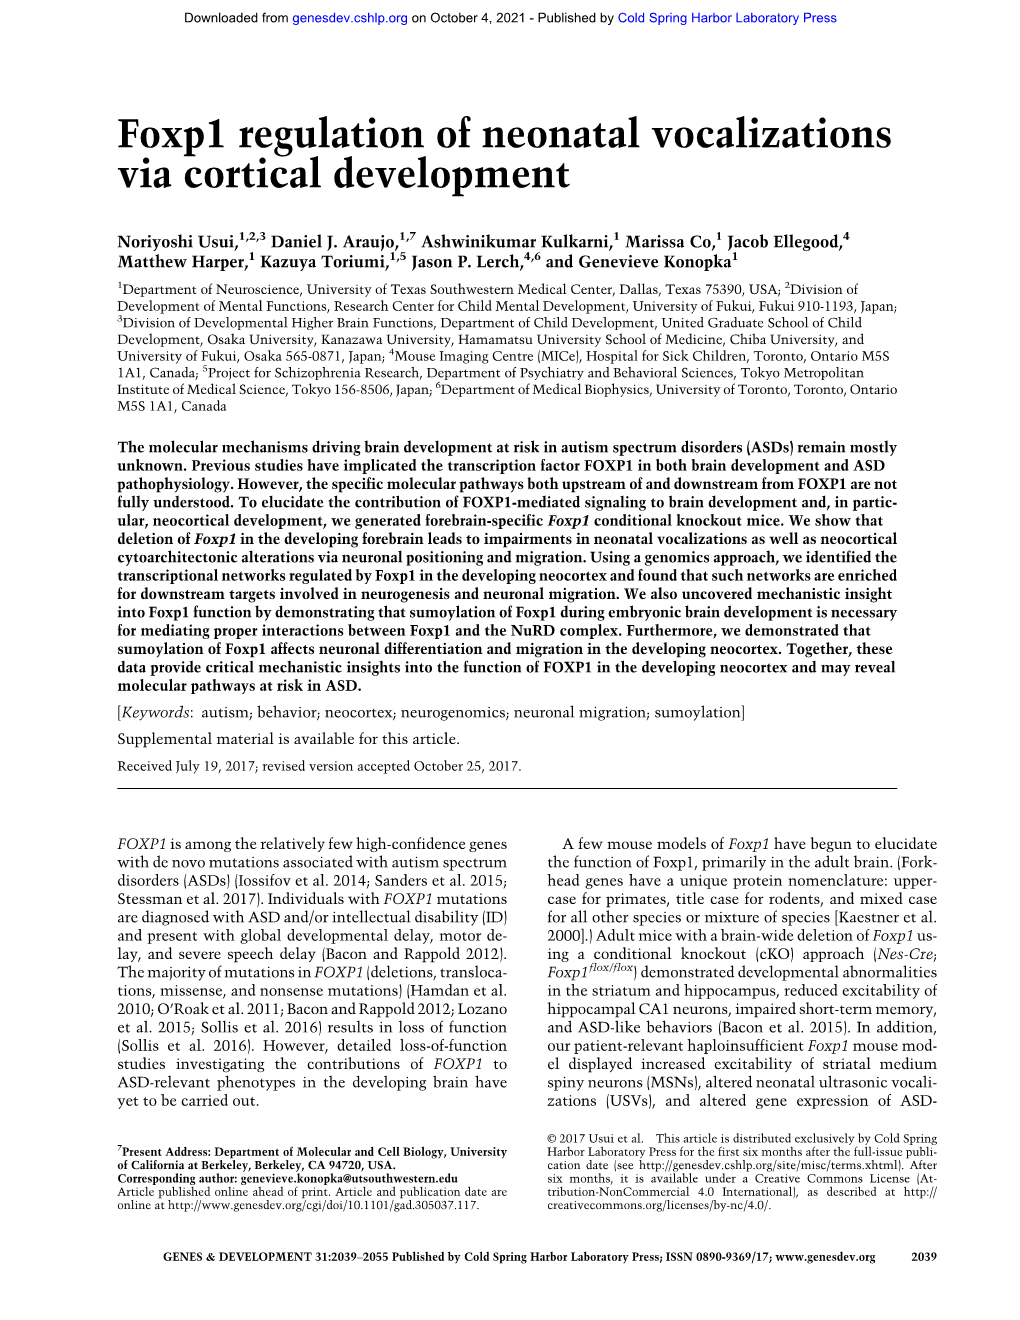 Foxp1 Regulation of Neonatal Vocalizations Via Cortical Development